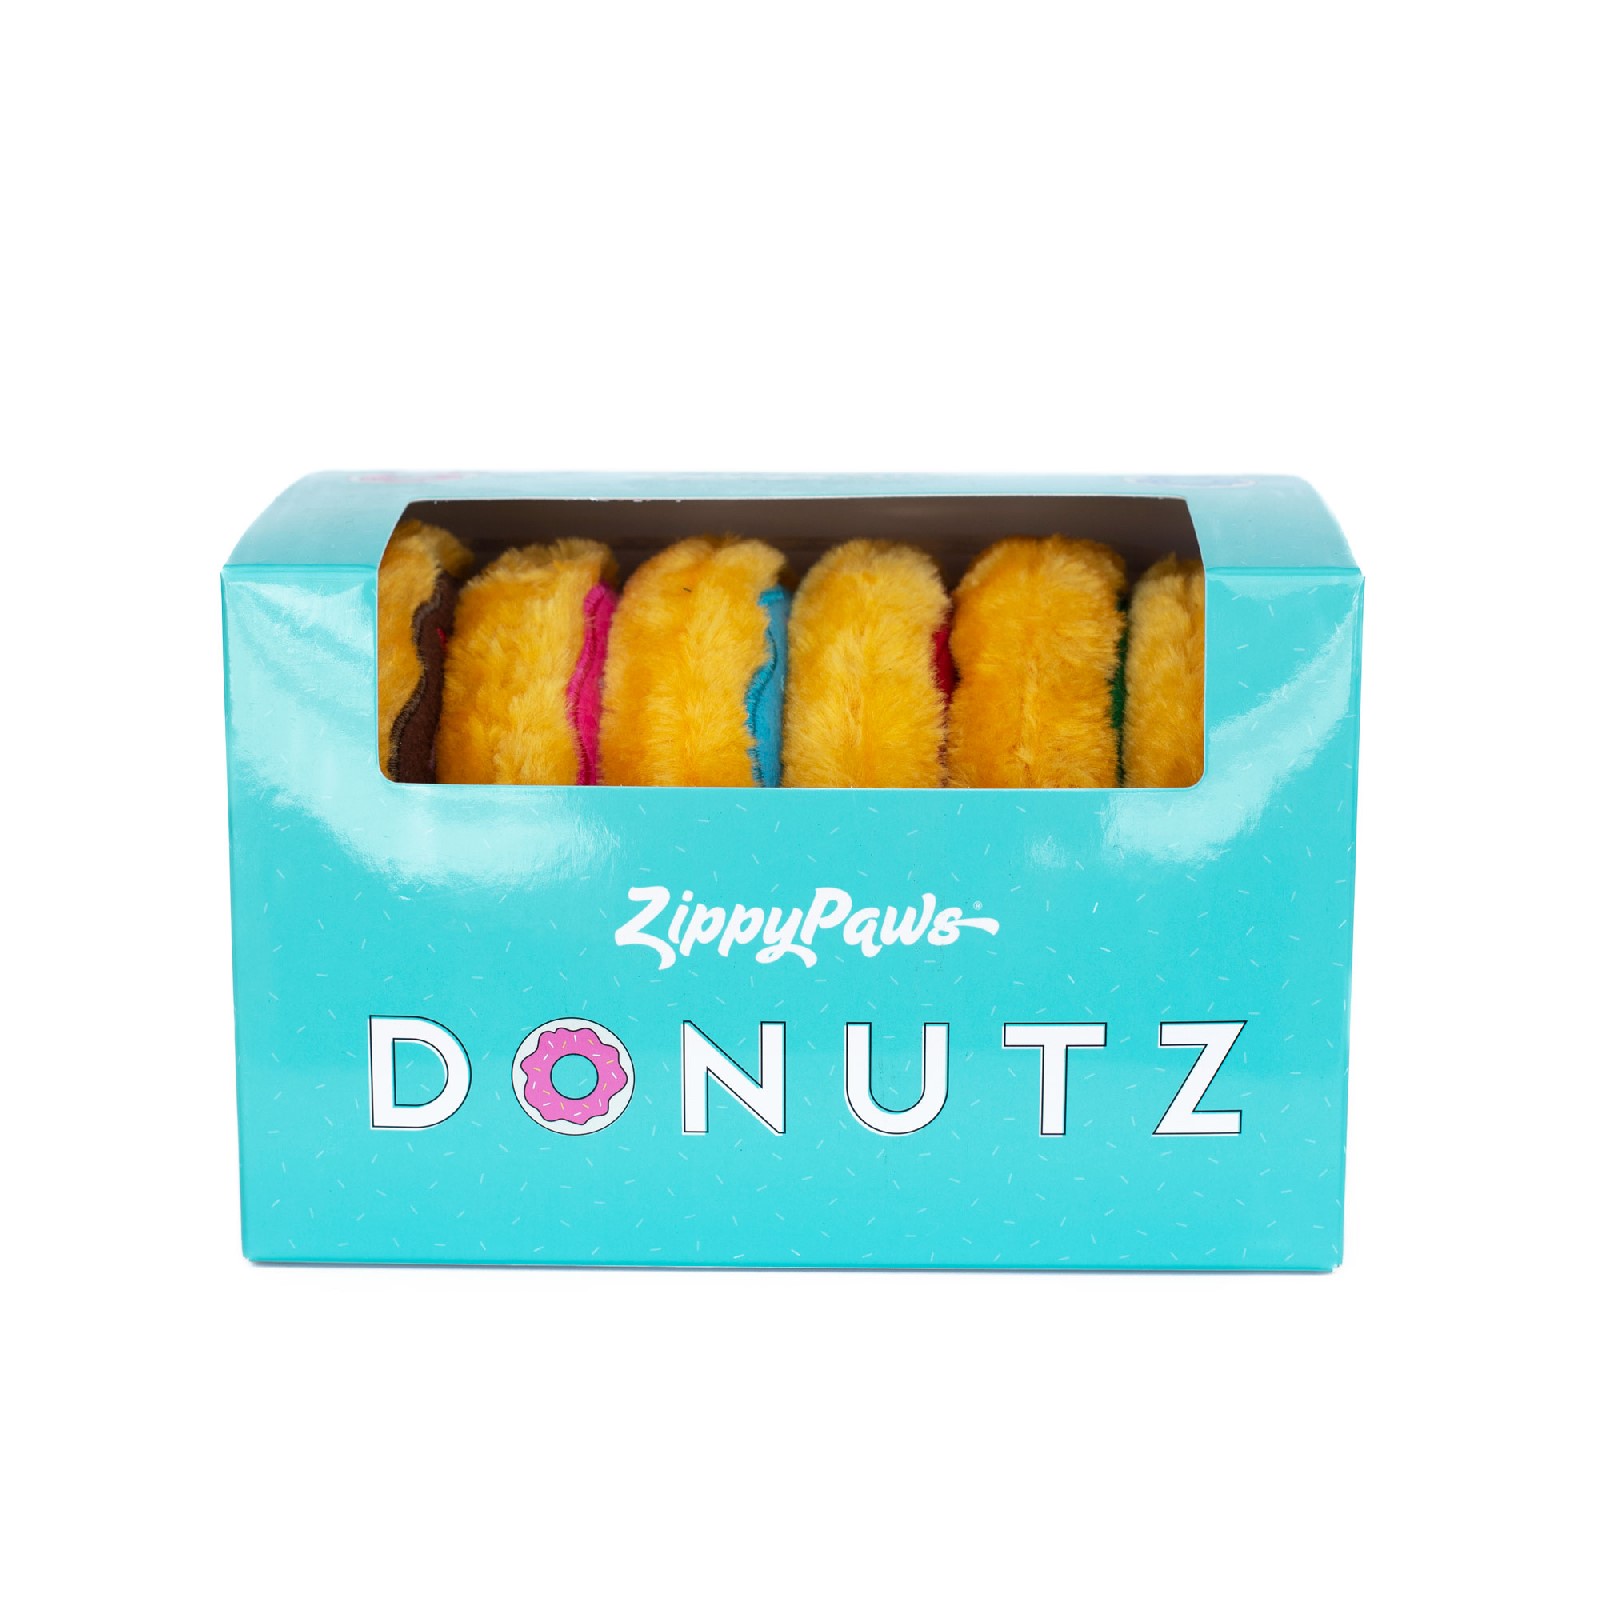 Zippy Paws Miniz Donutz Plush Squeaker Dog Toy - Gift Box with 6 Mini Donuts image 0